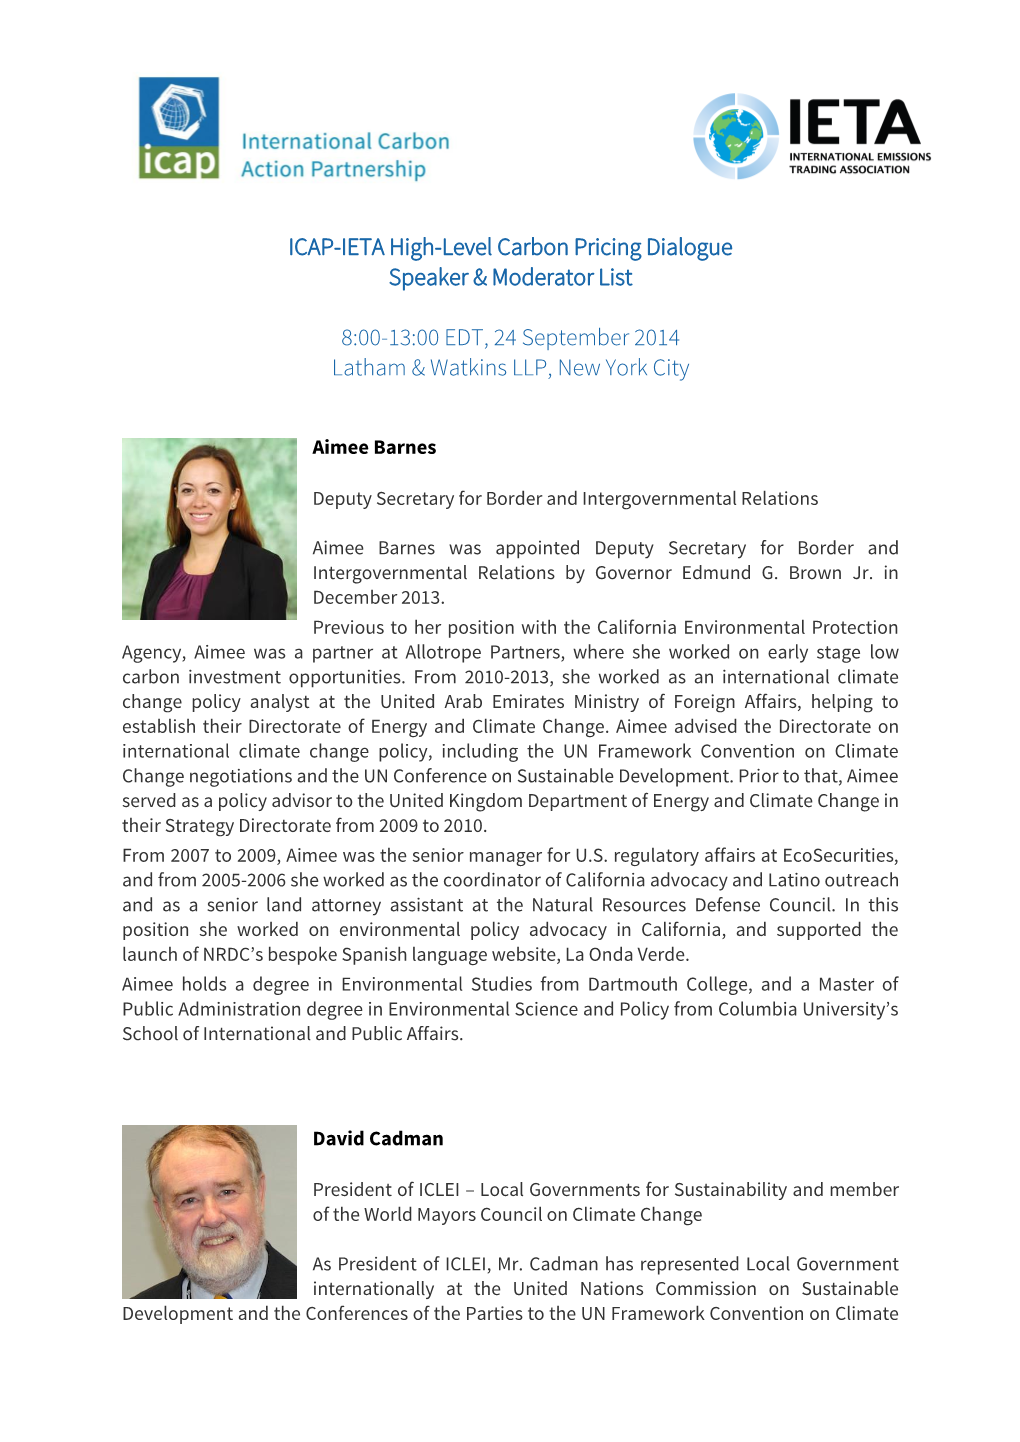 ICAP-IETA High-Level Carbon Pricing Dialogue Speaker & Moderator List